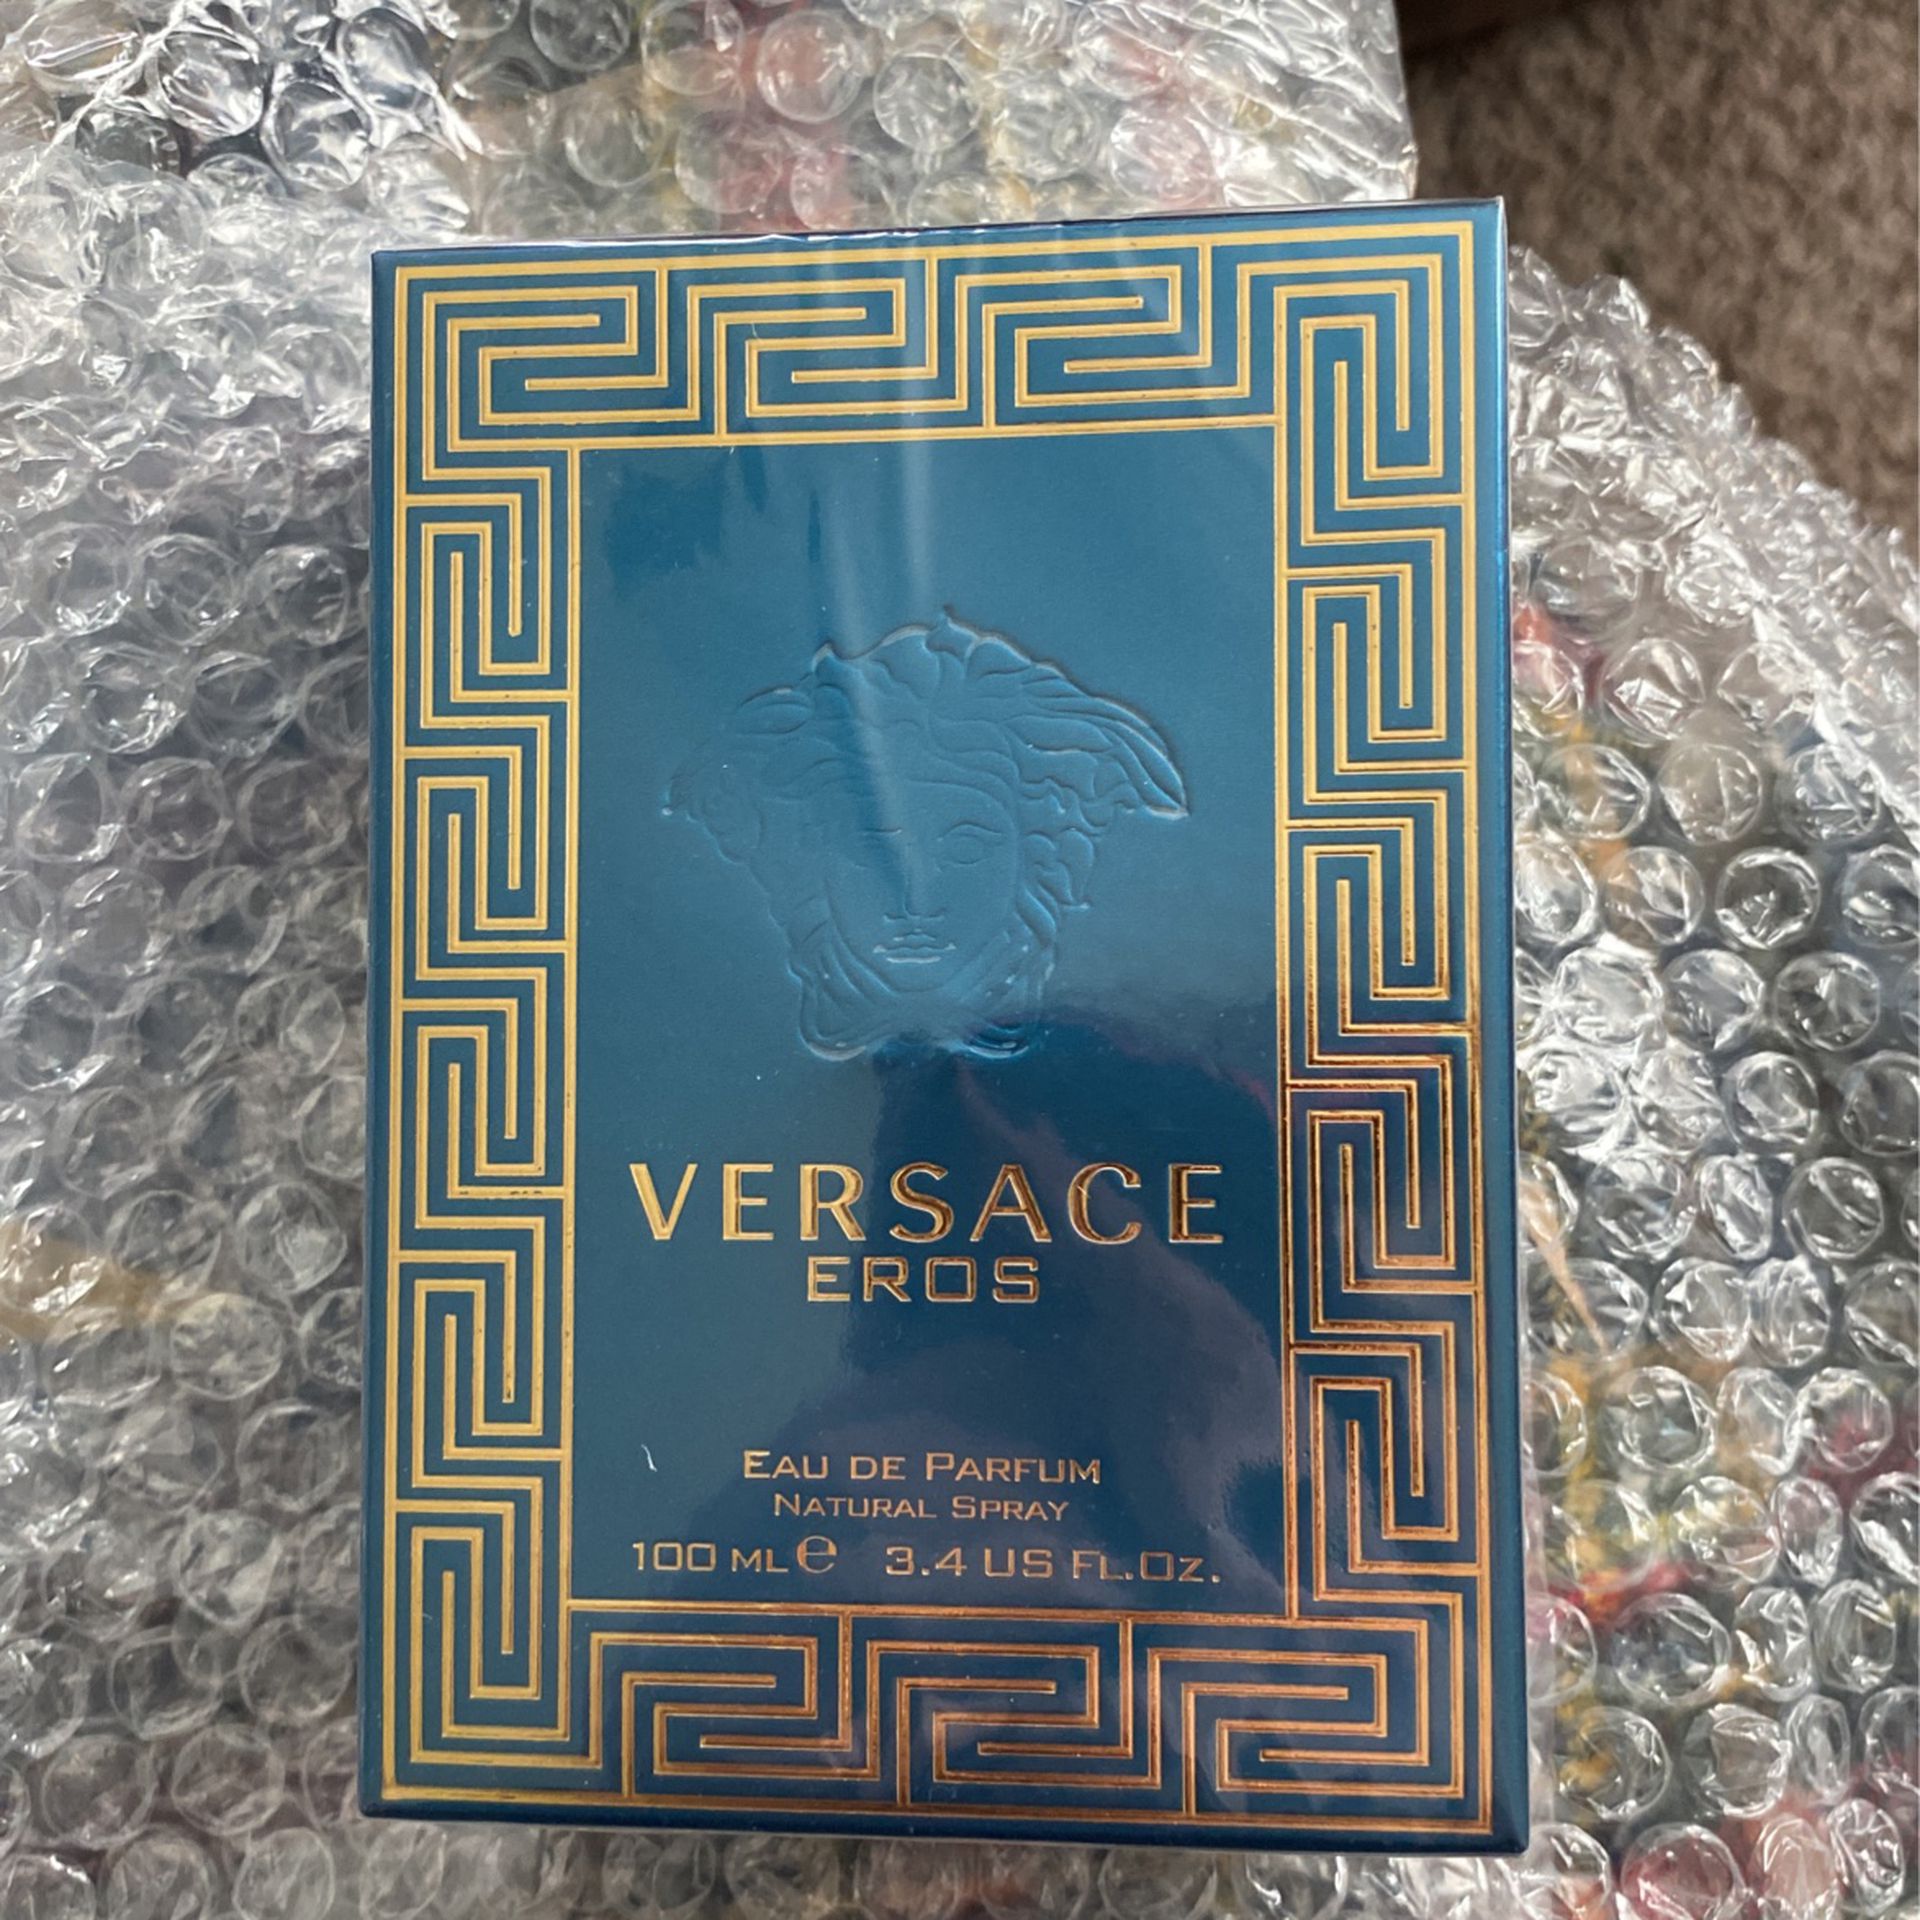  Versace Eros Eau DE Parfum 100 ml, (Sealed in Box)